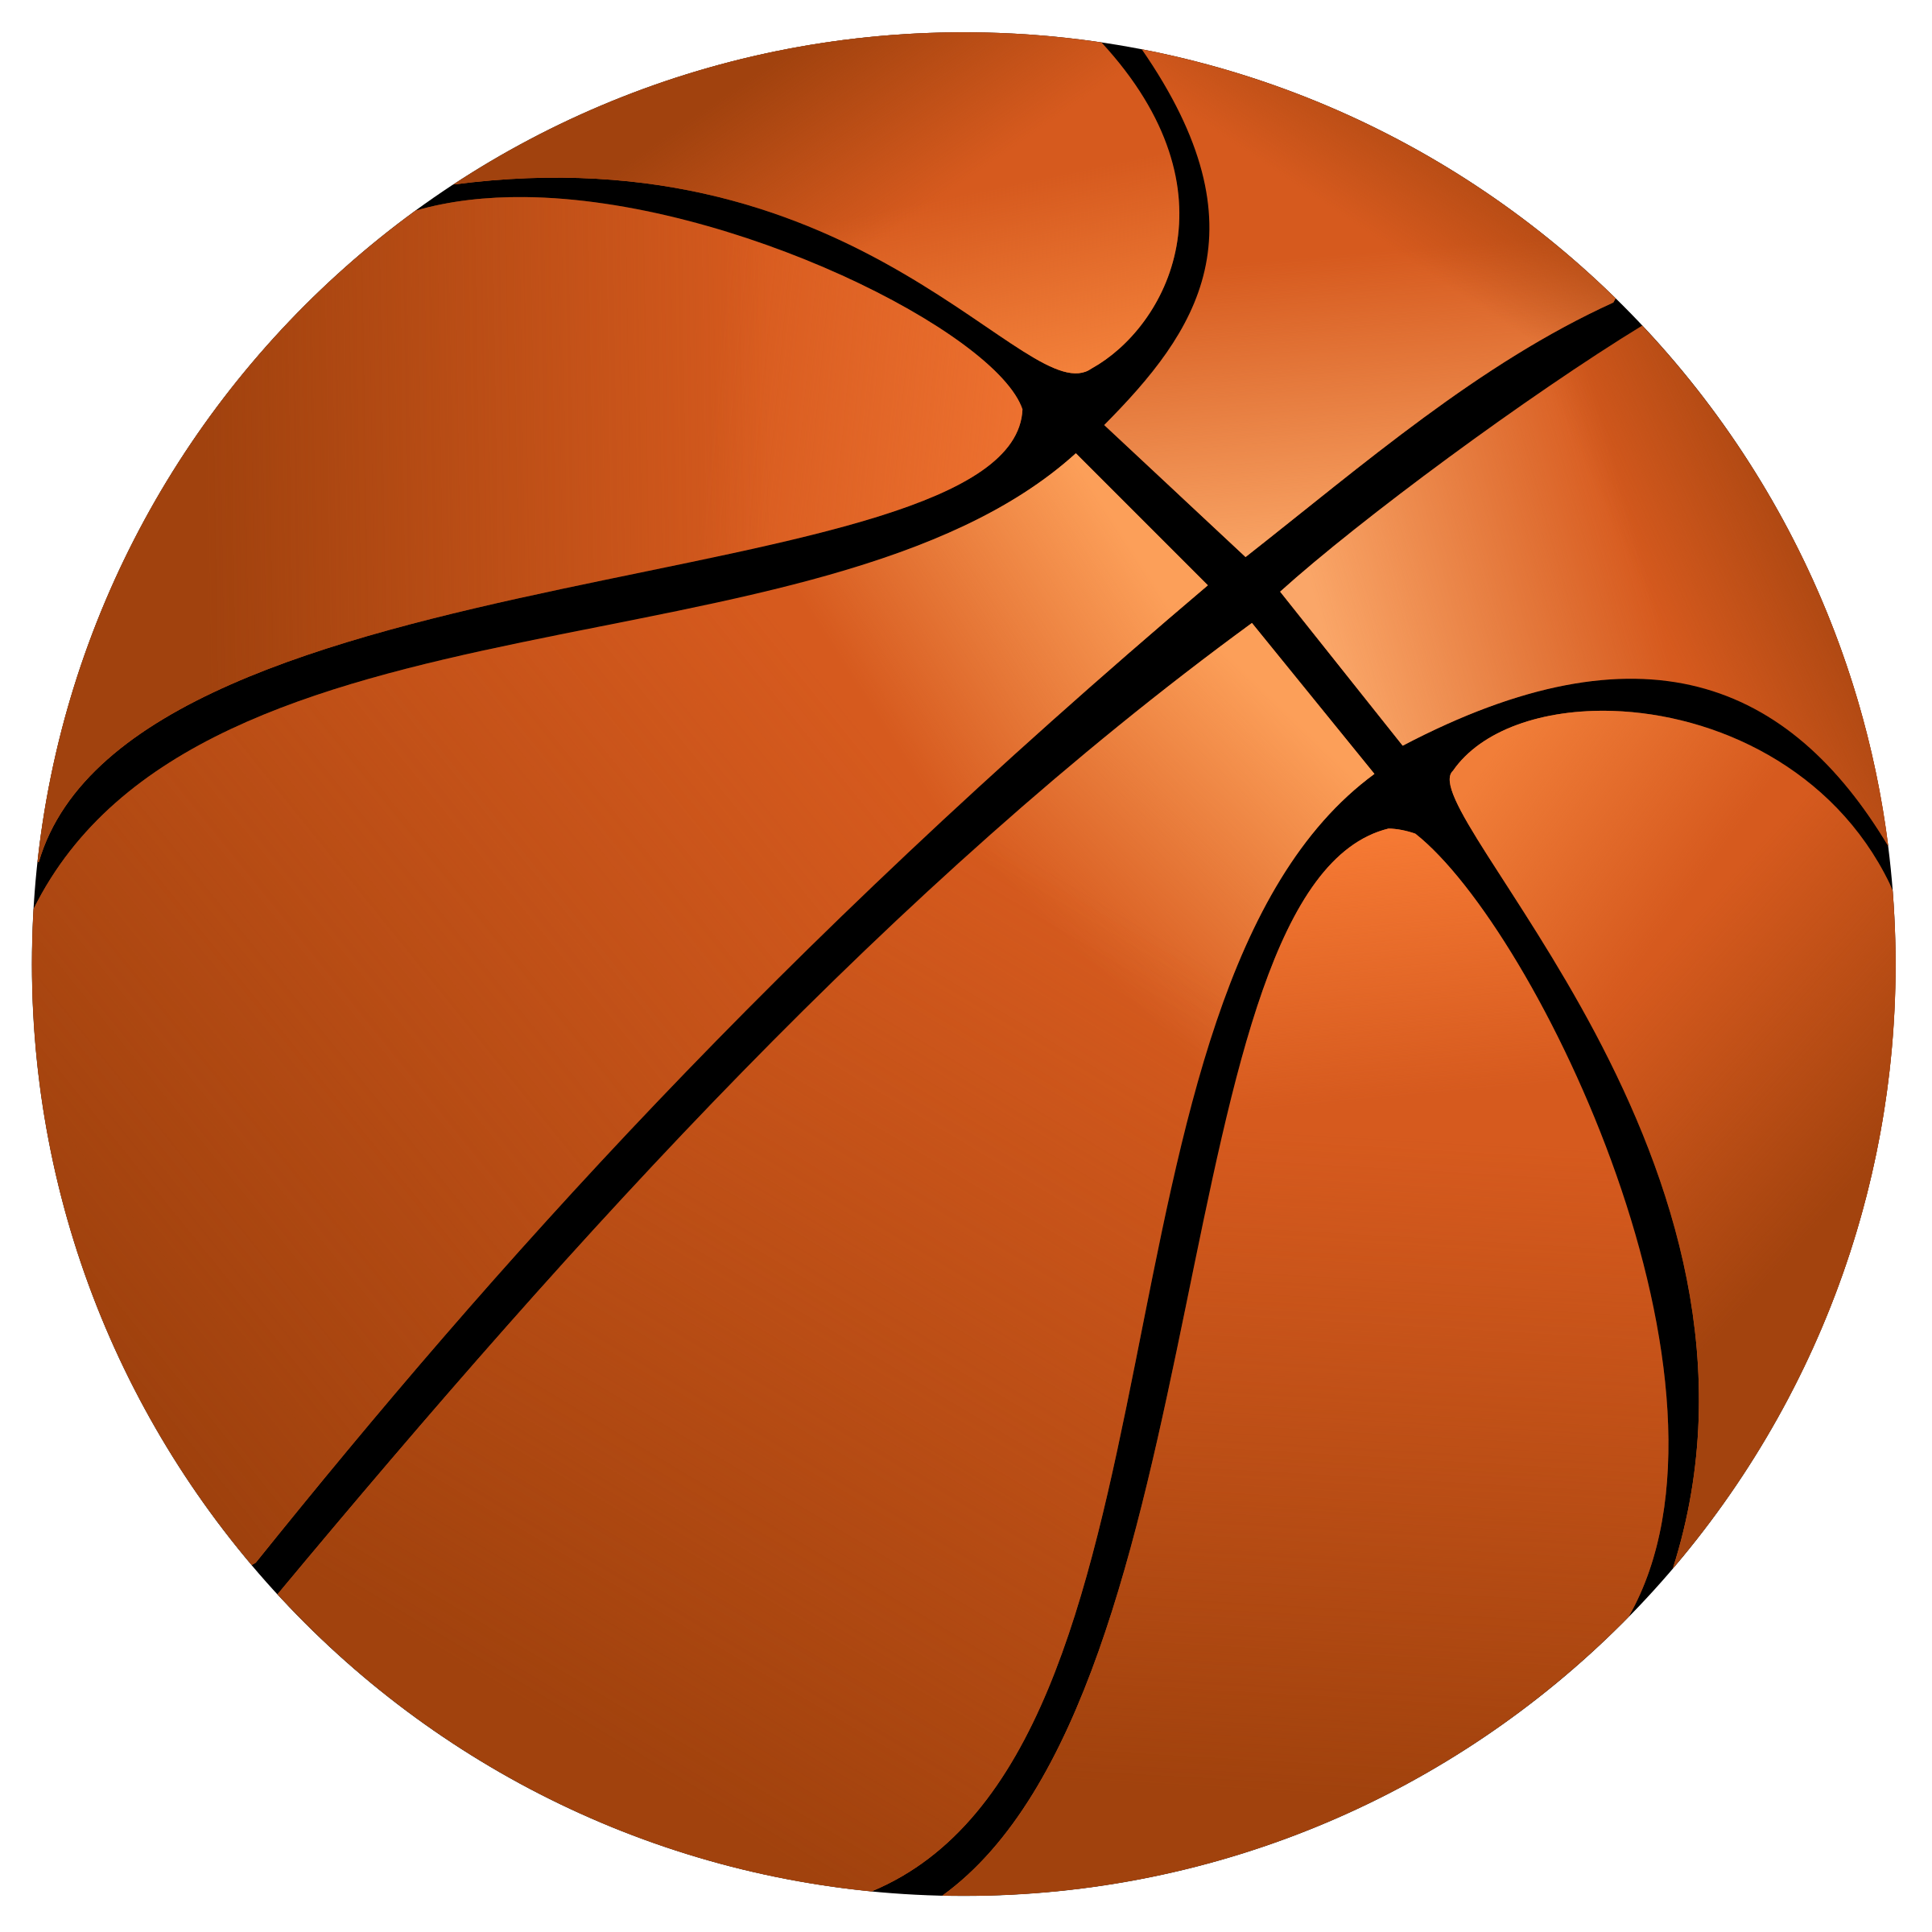 basketball-court-clip-art-basket-png-download-2400-2400-free